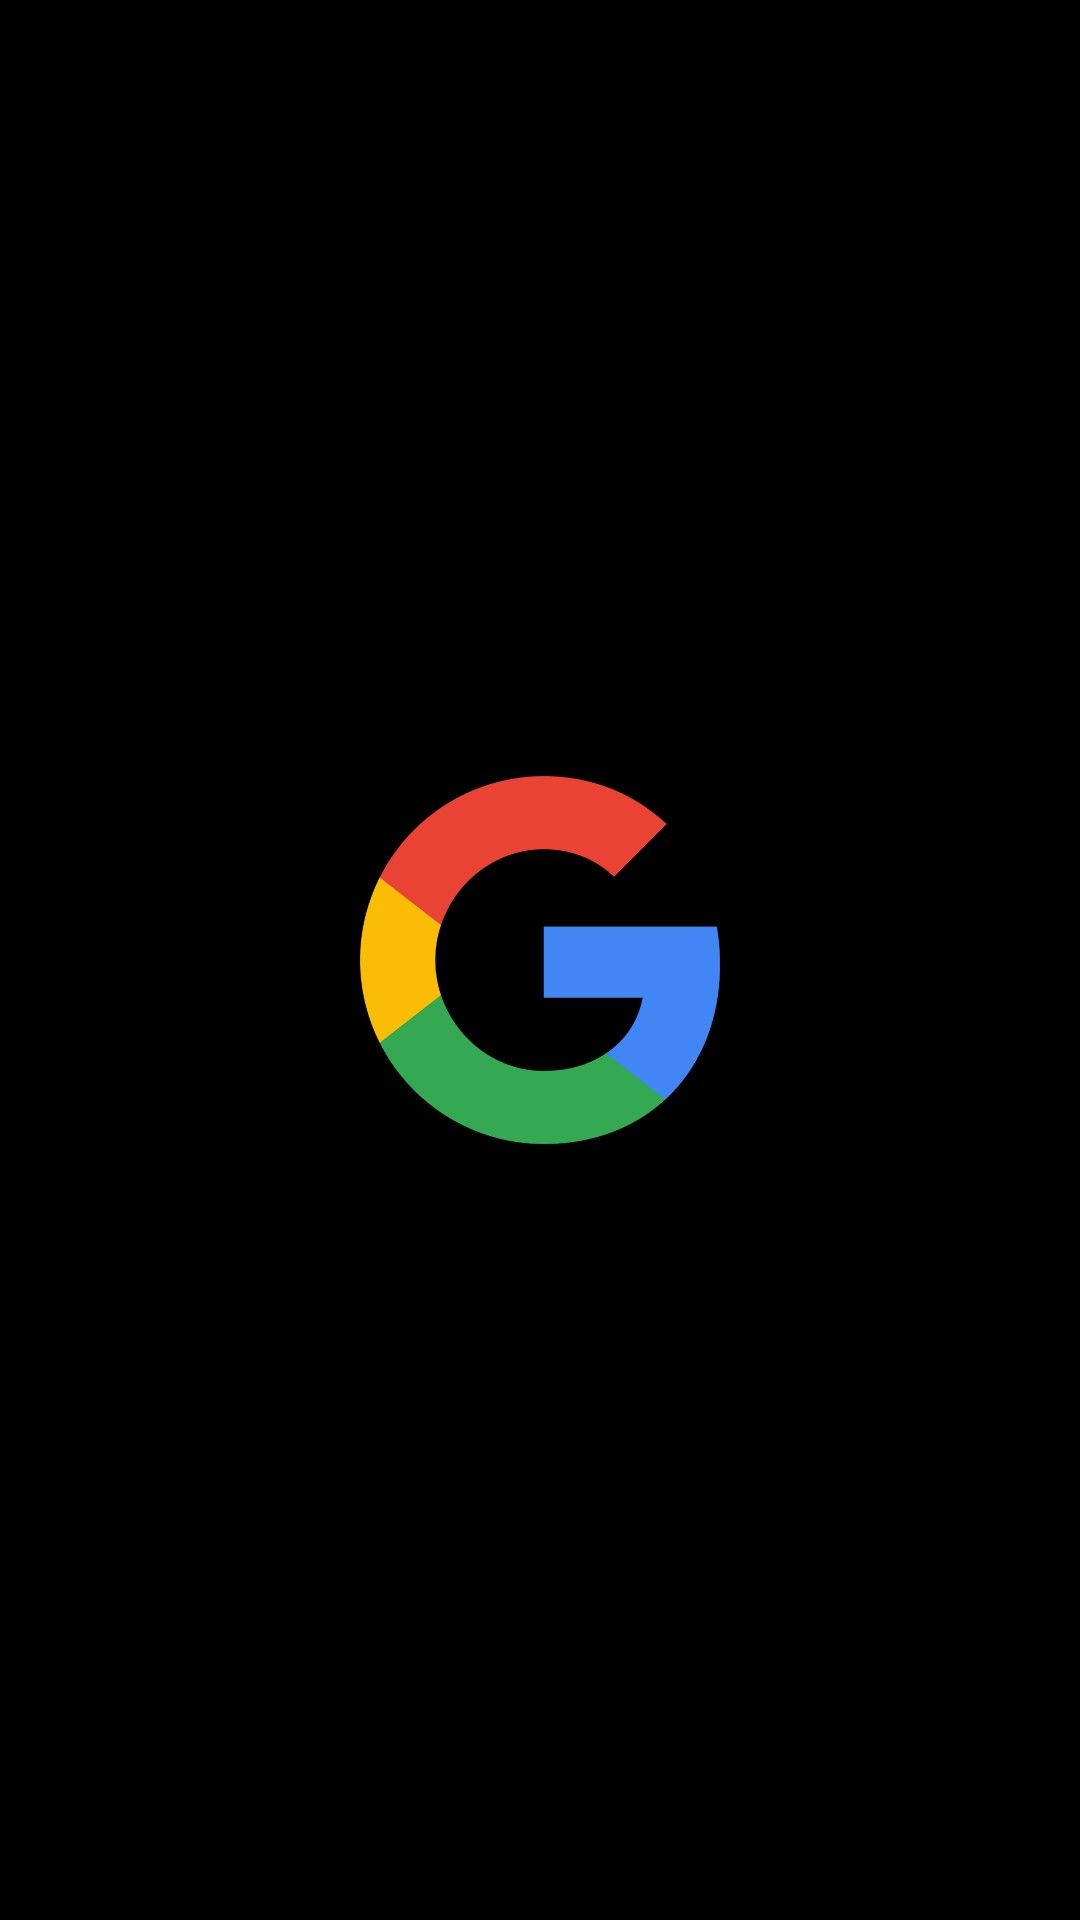 Google G Logo On Black